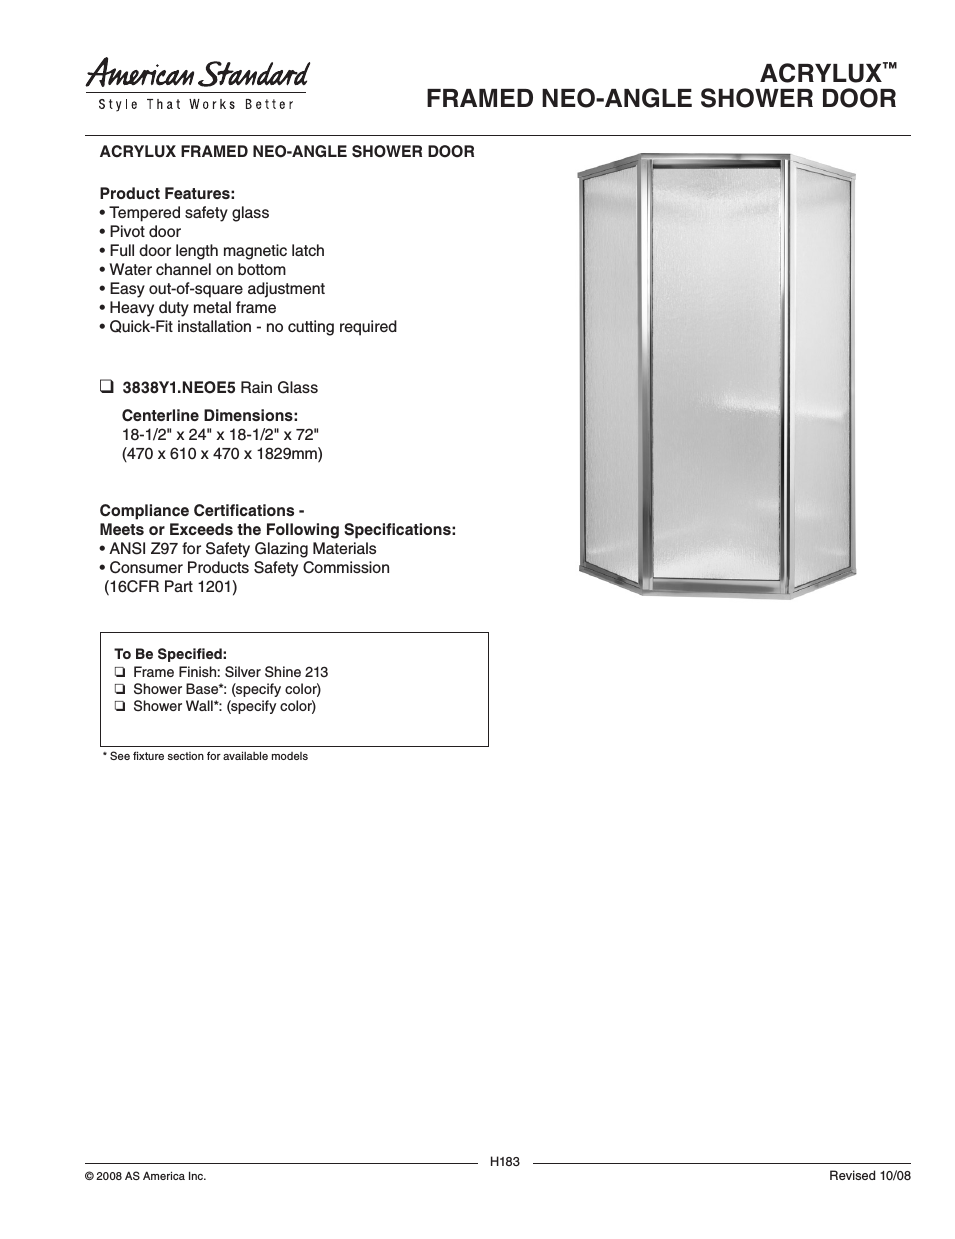 Acrylux Framed Neo-Angle Shower Door 3838Y1.NEOE5